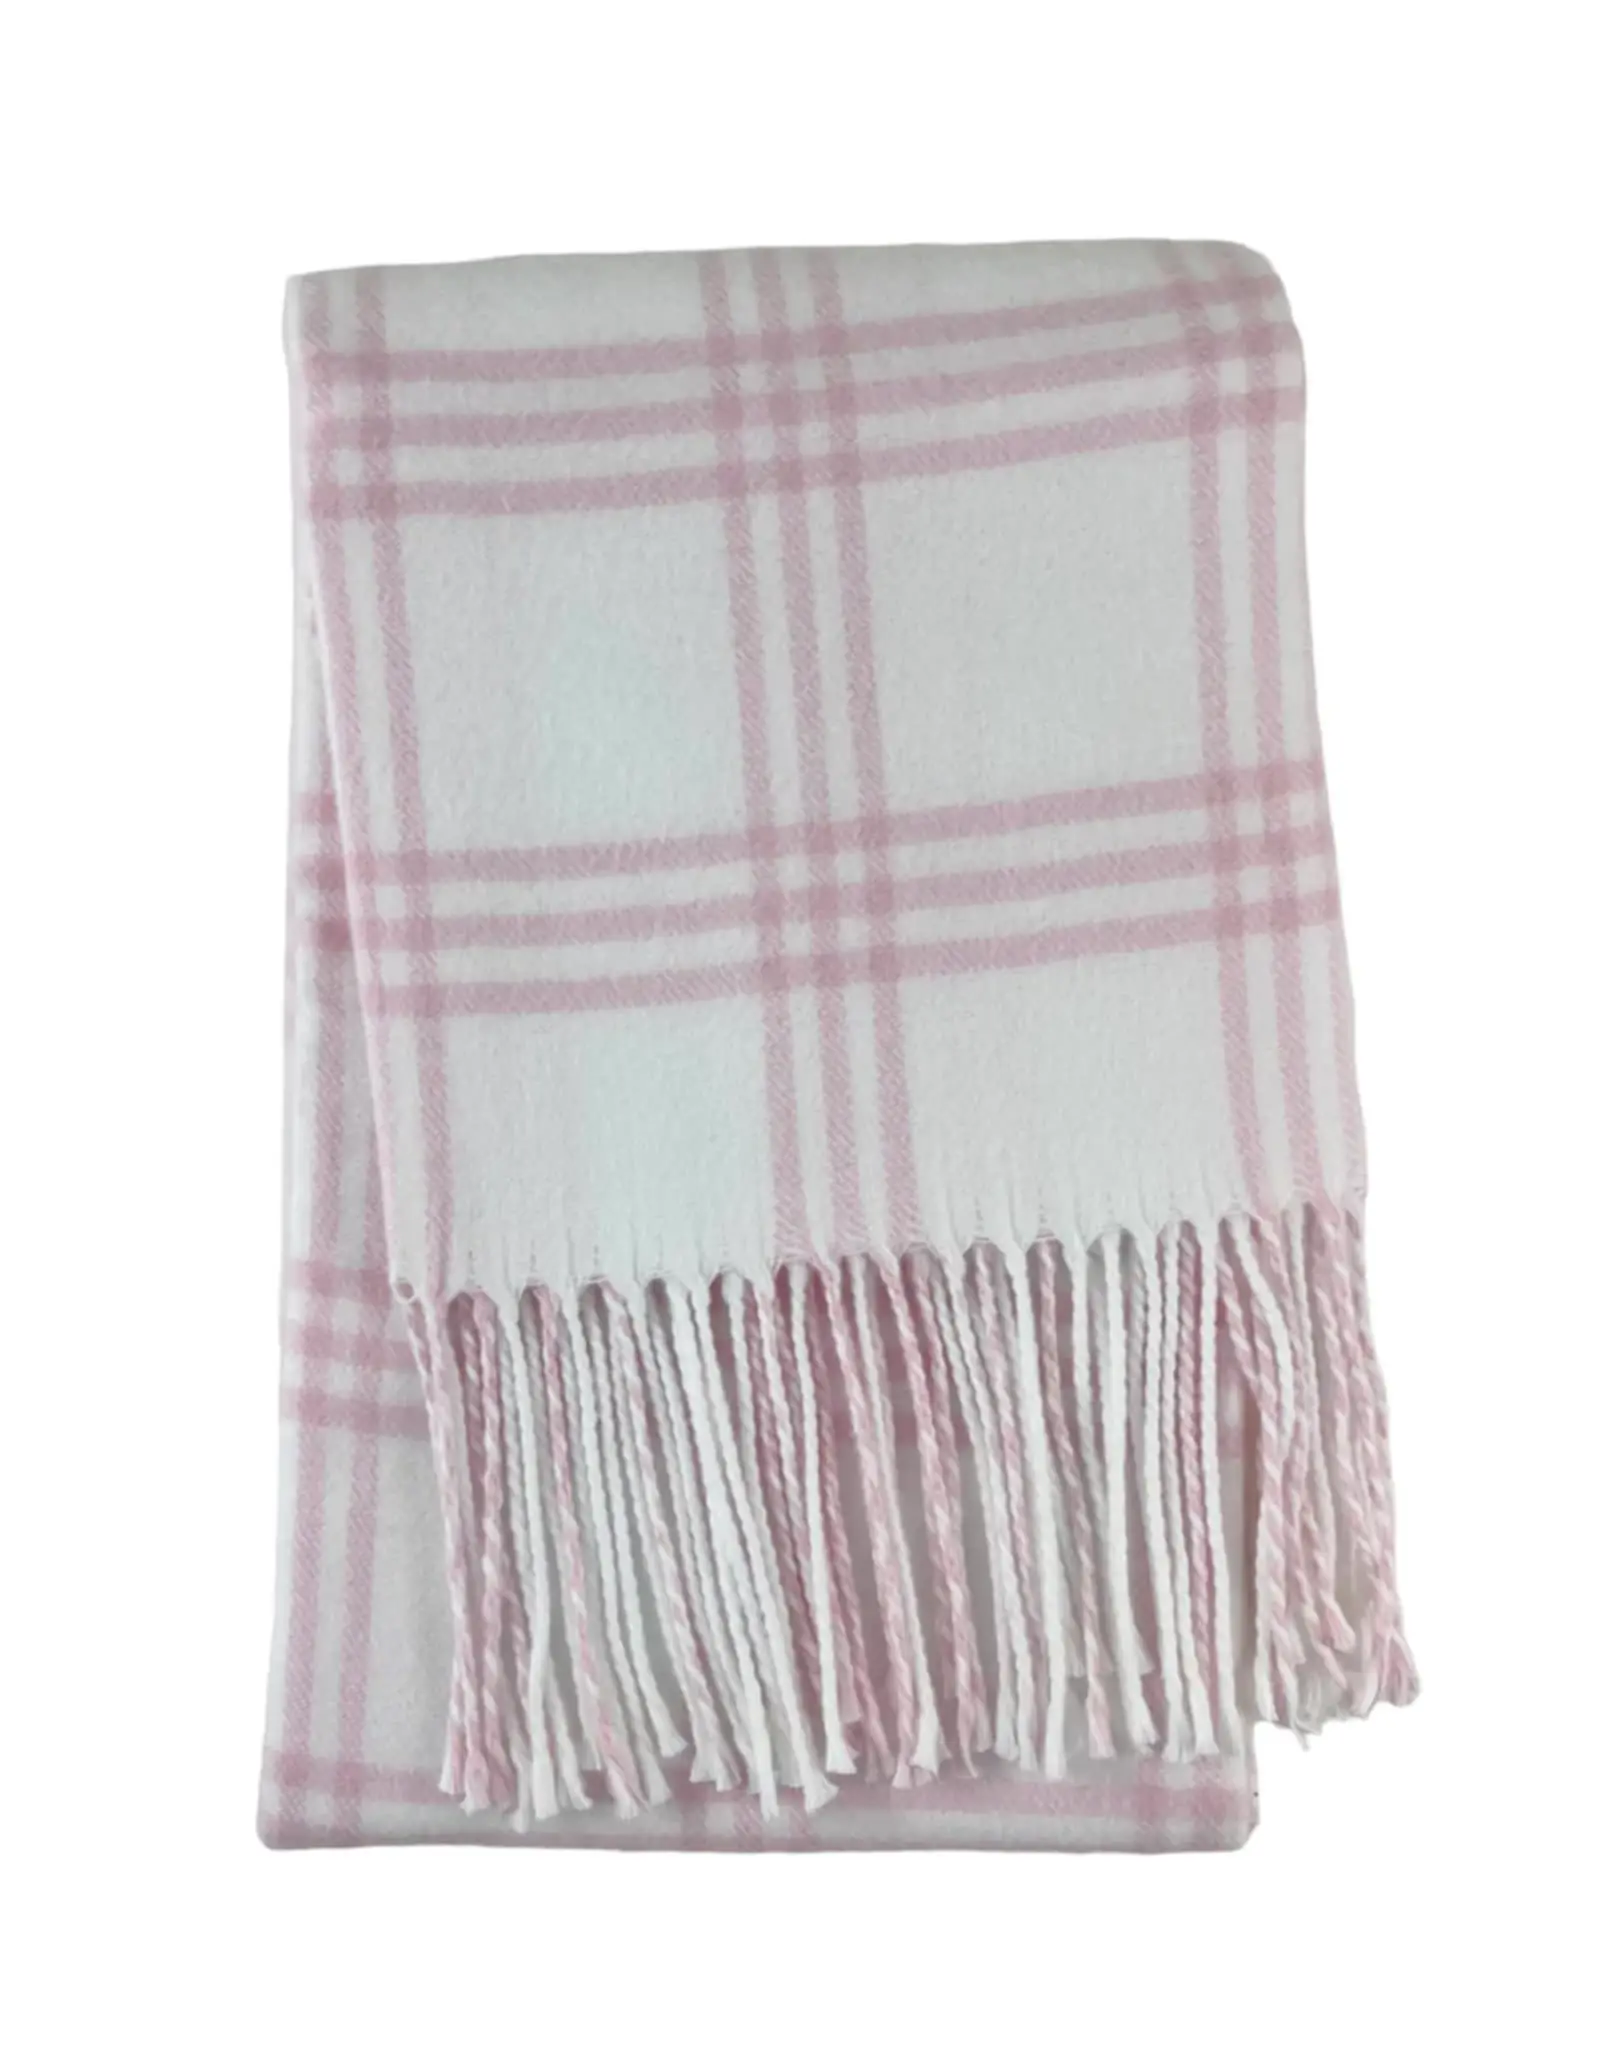 A Soft Idea ASI Windowpane Check Flannel Blanket White/Pink